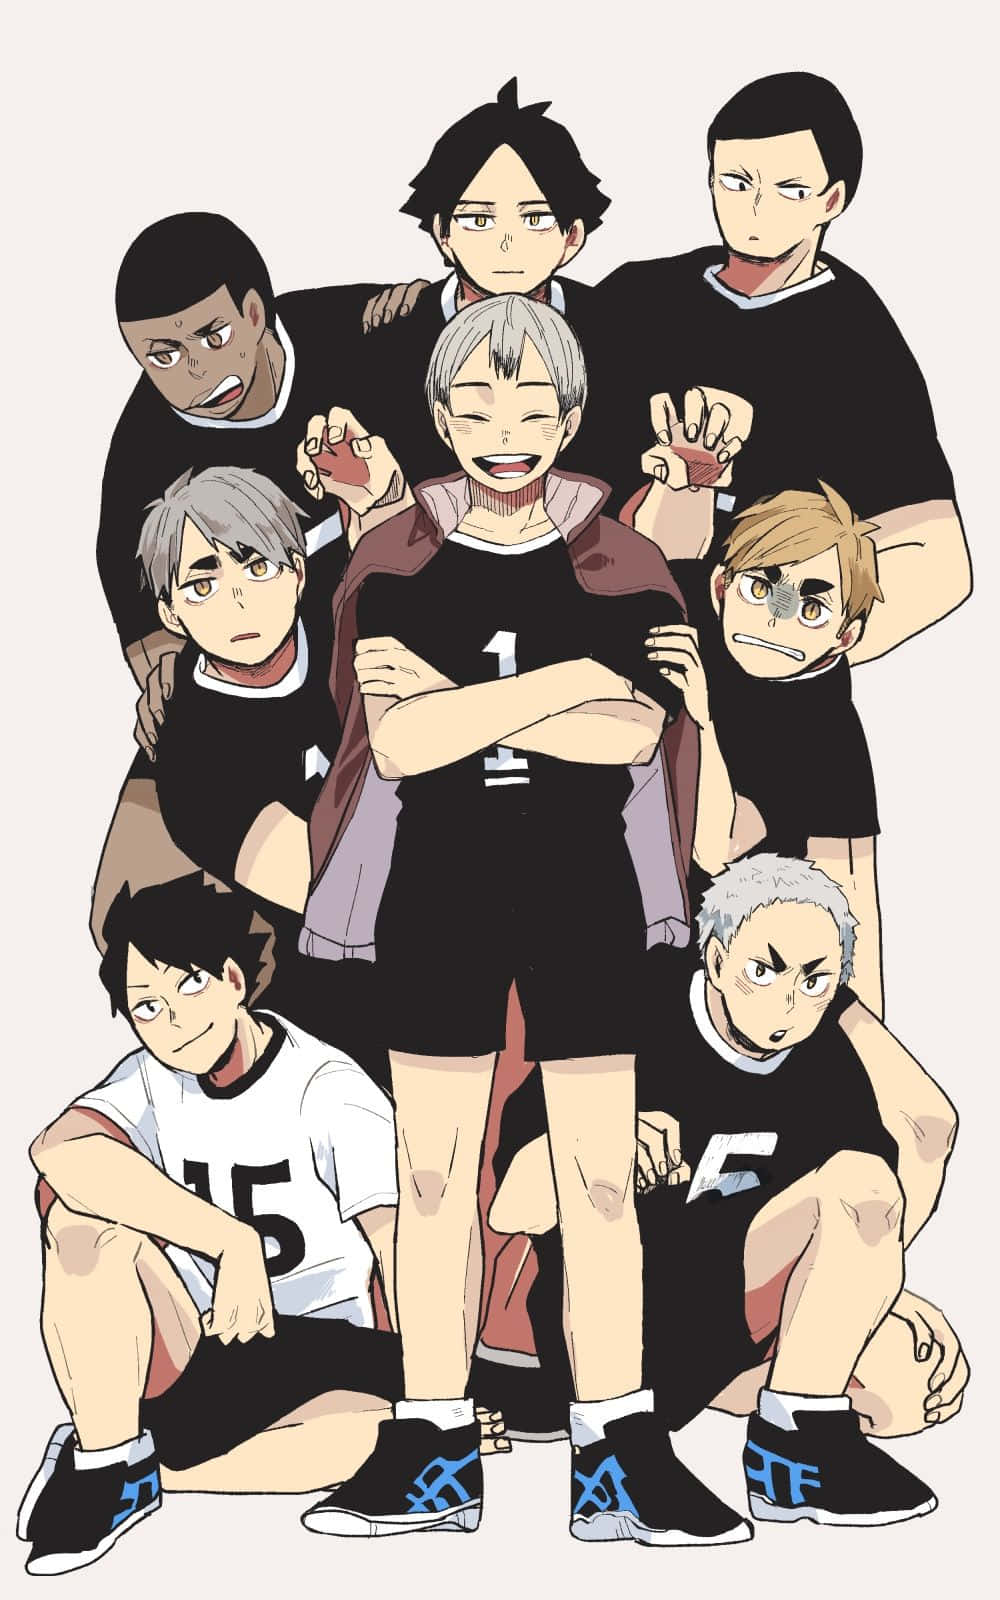 Inarizaki High School Volleyball Team in Action Wallpaper